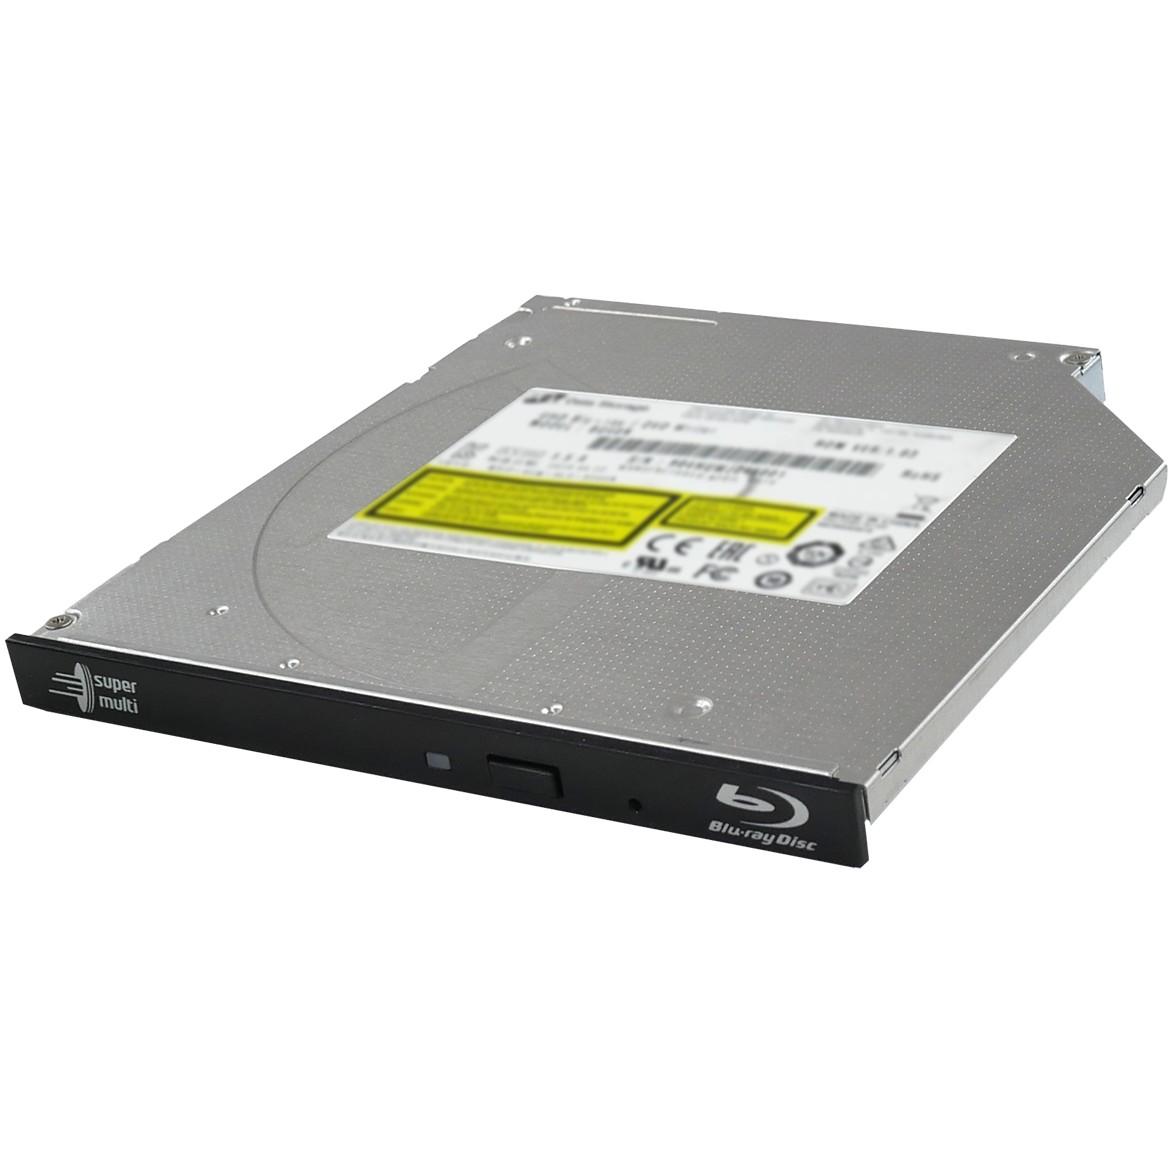 Hitachi-LG Data Storage BU40N, DVD-Brenner, Hitachi-LG BU40N (BILD1)